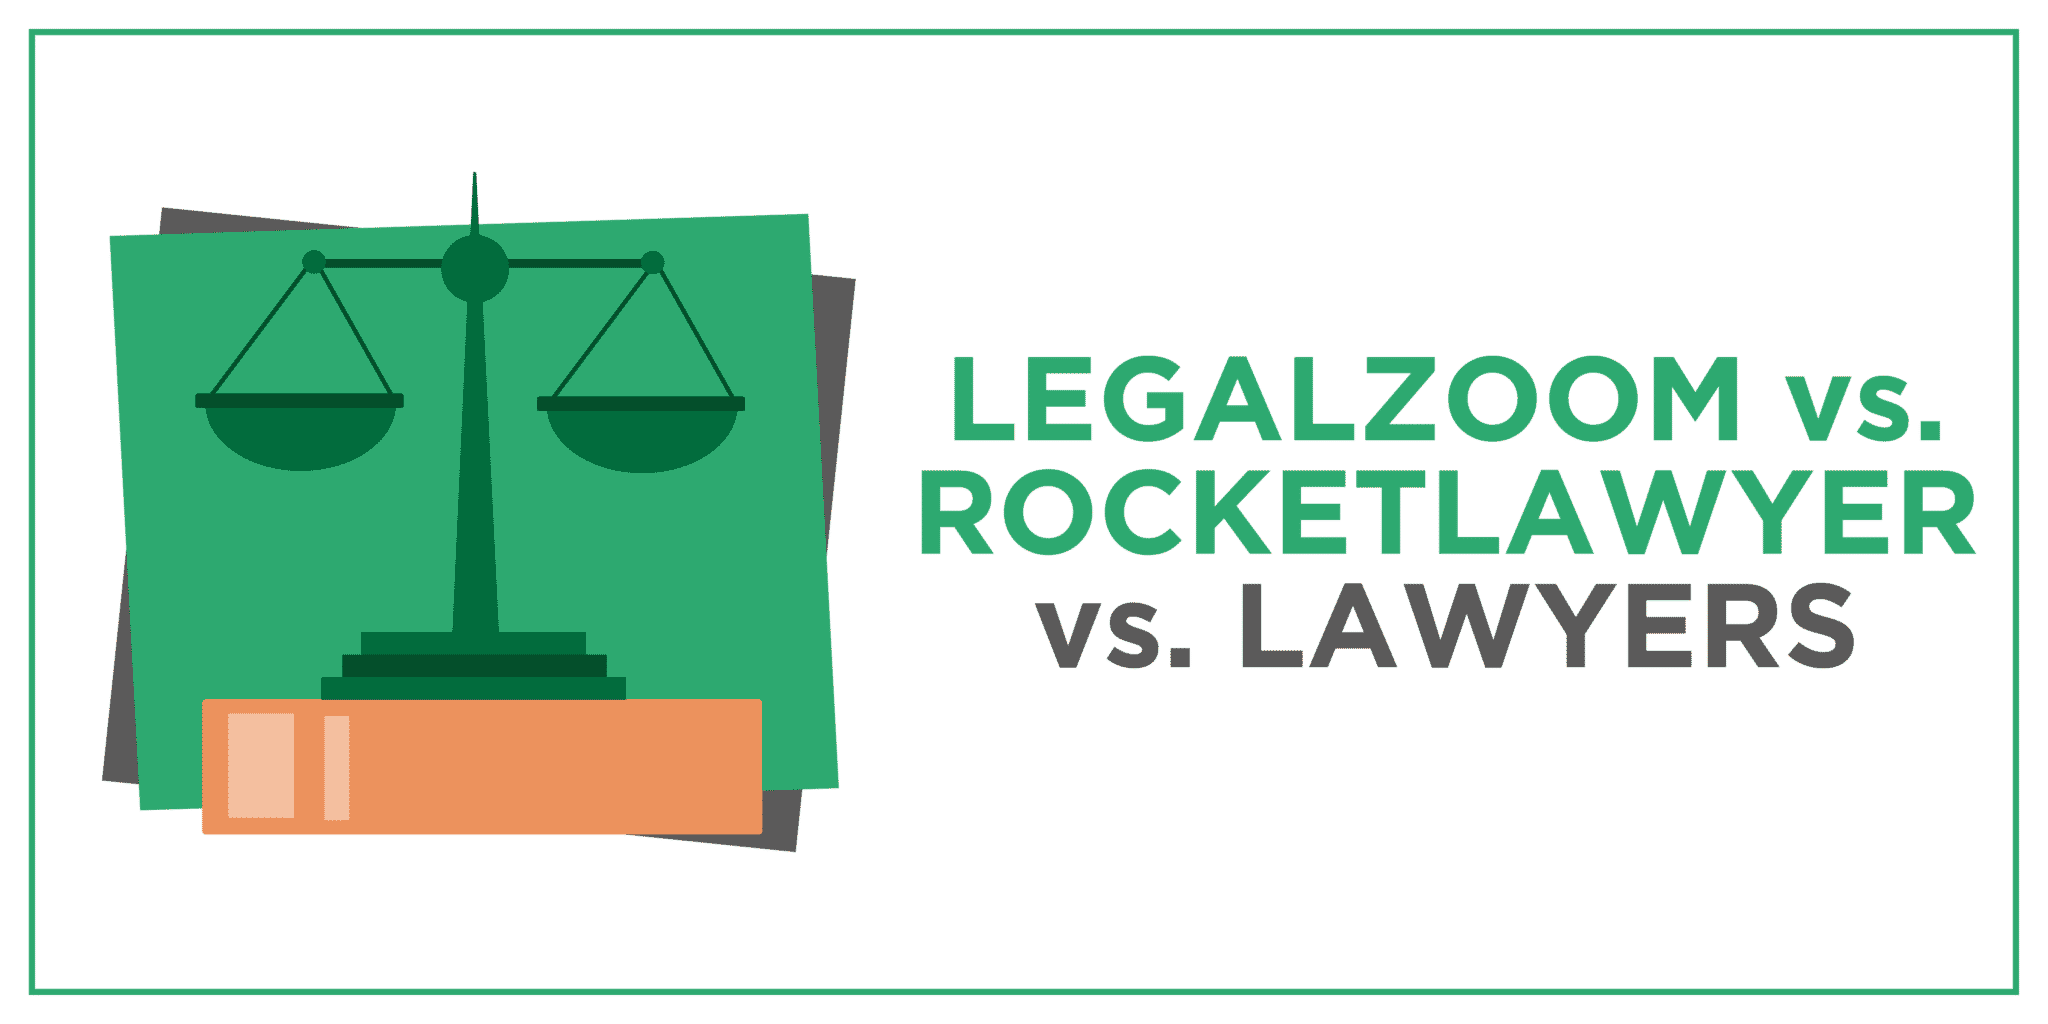 LegalZoom vs. RocketLawyer vs. Lawyers